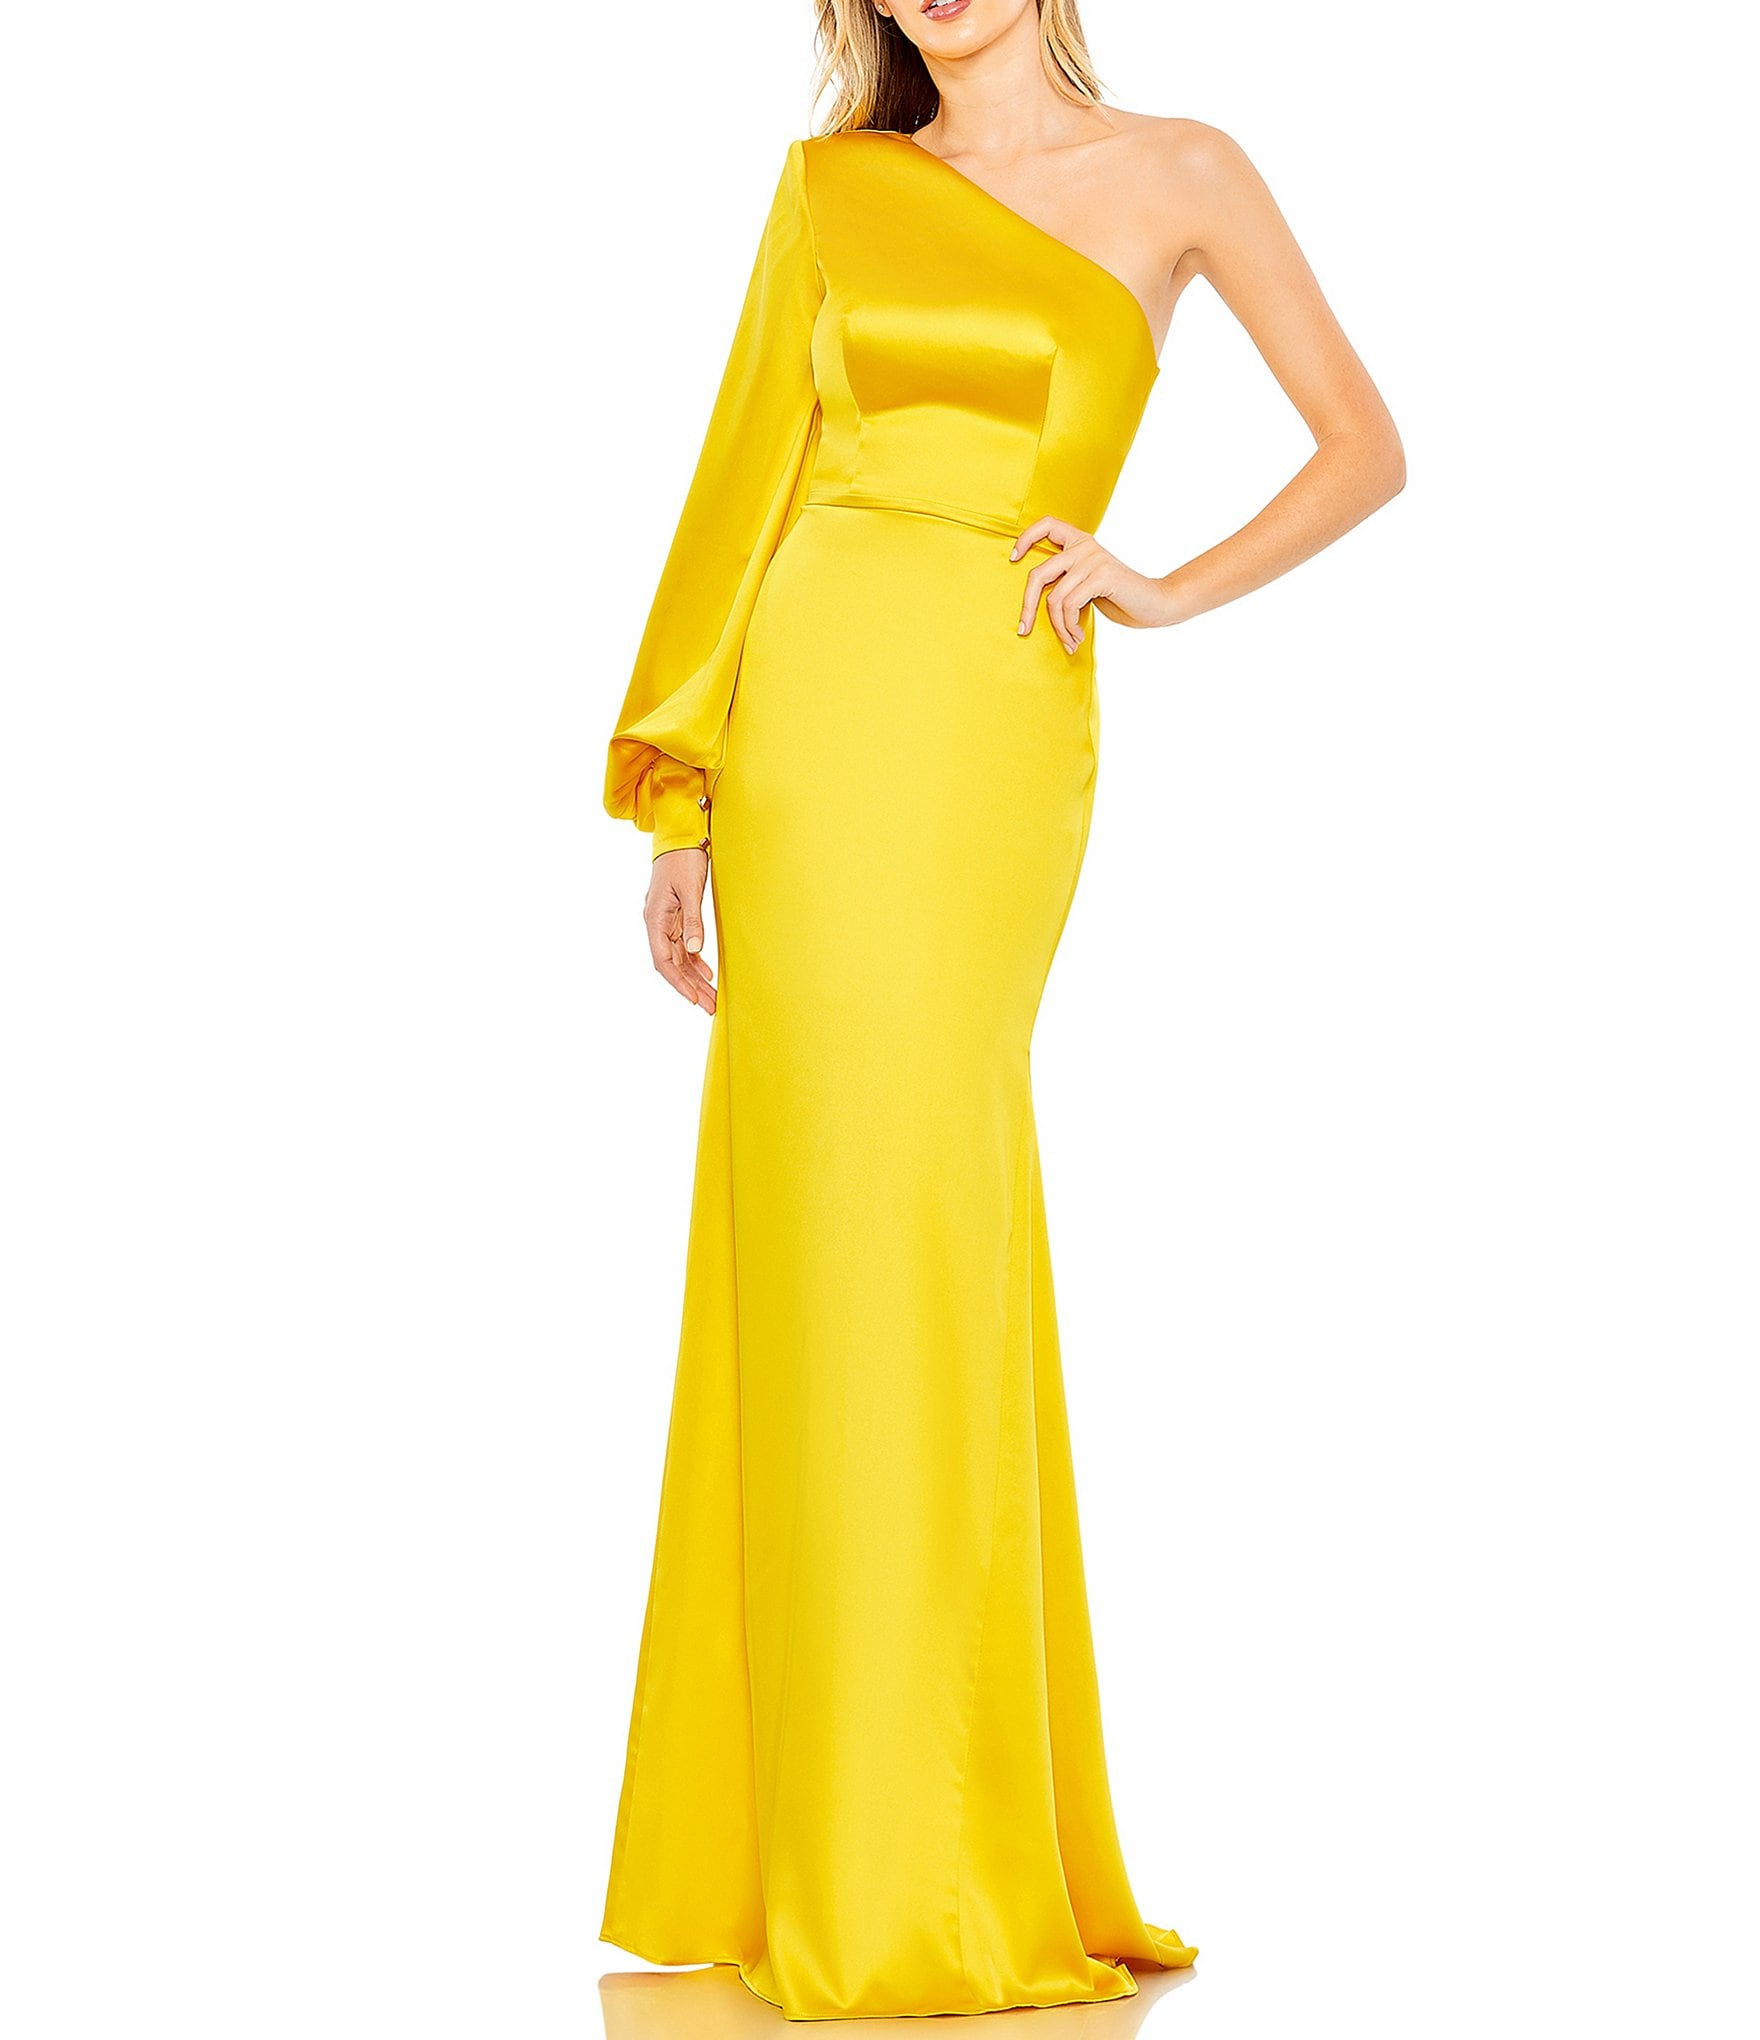 Yellow Dress For Kids - Shop on Pinterest